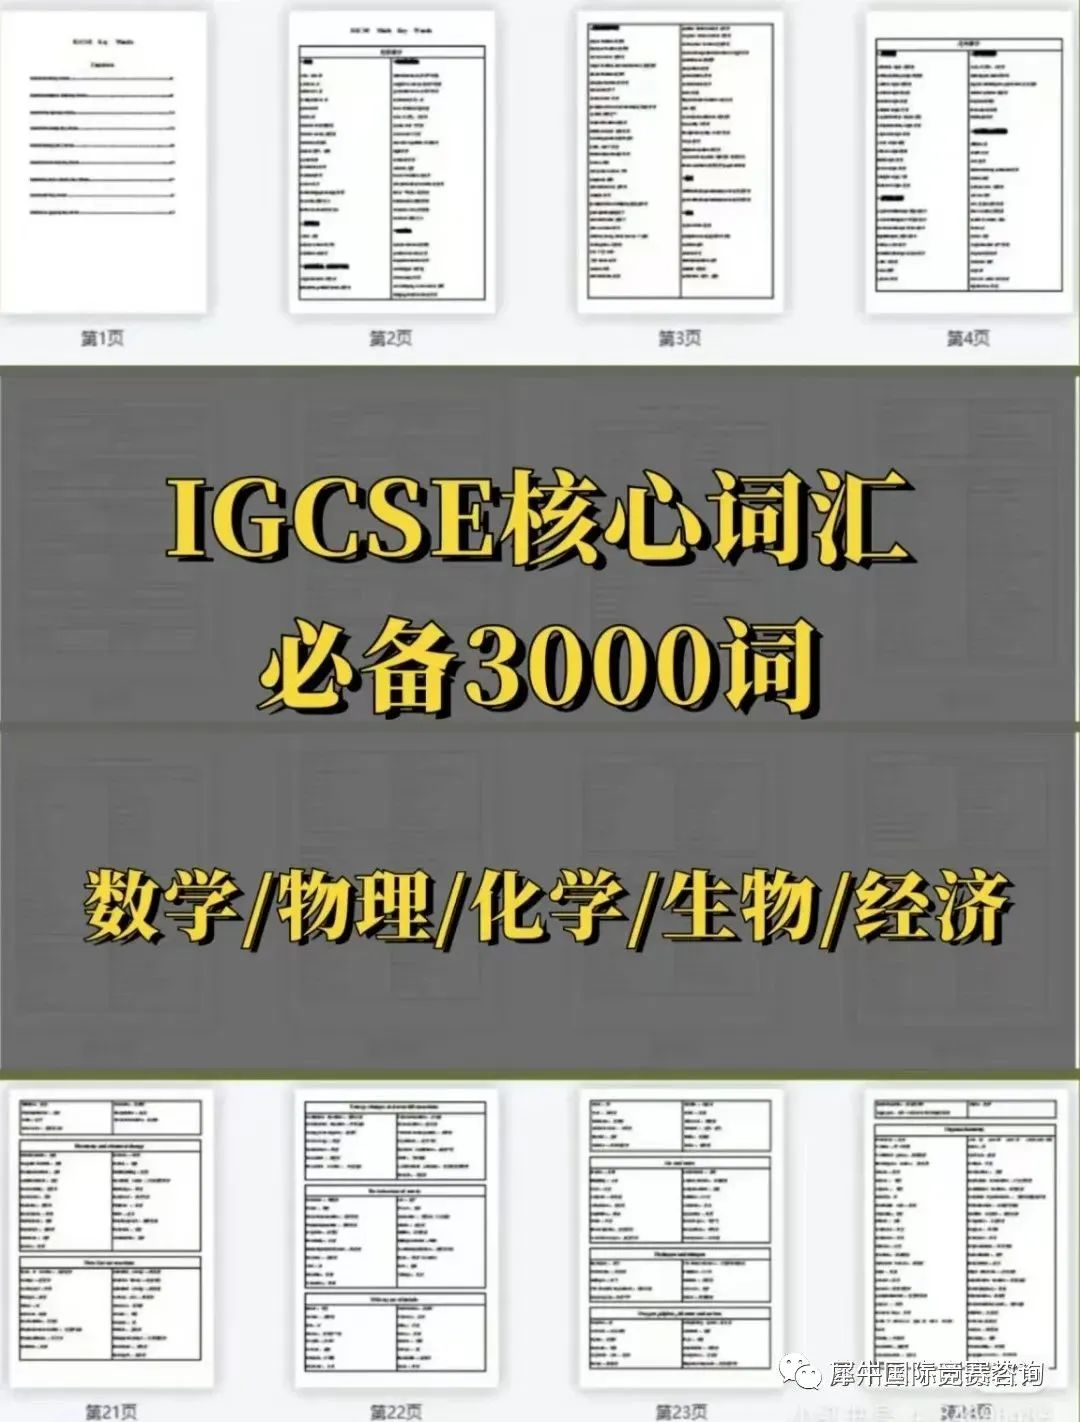 IGCSE生物,IGCSE生物新考纲,IGCSE生物词汇,IGCSE拔高课程培训,